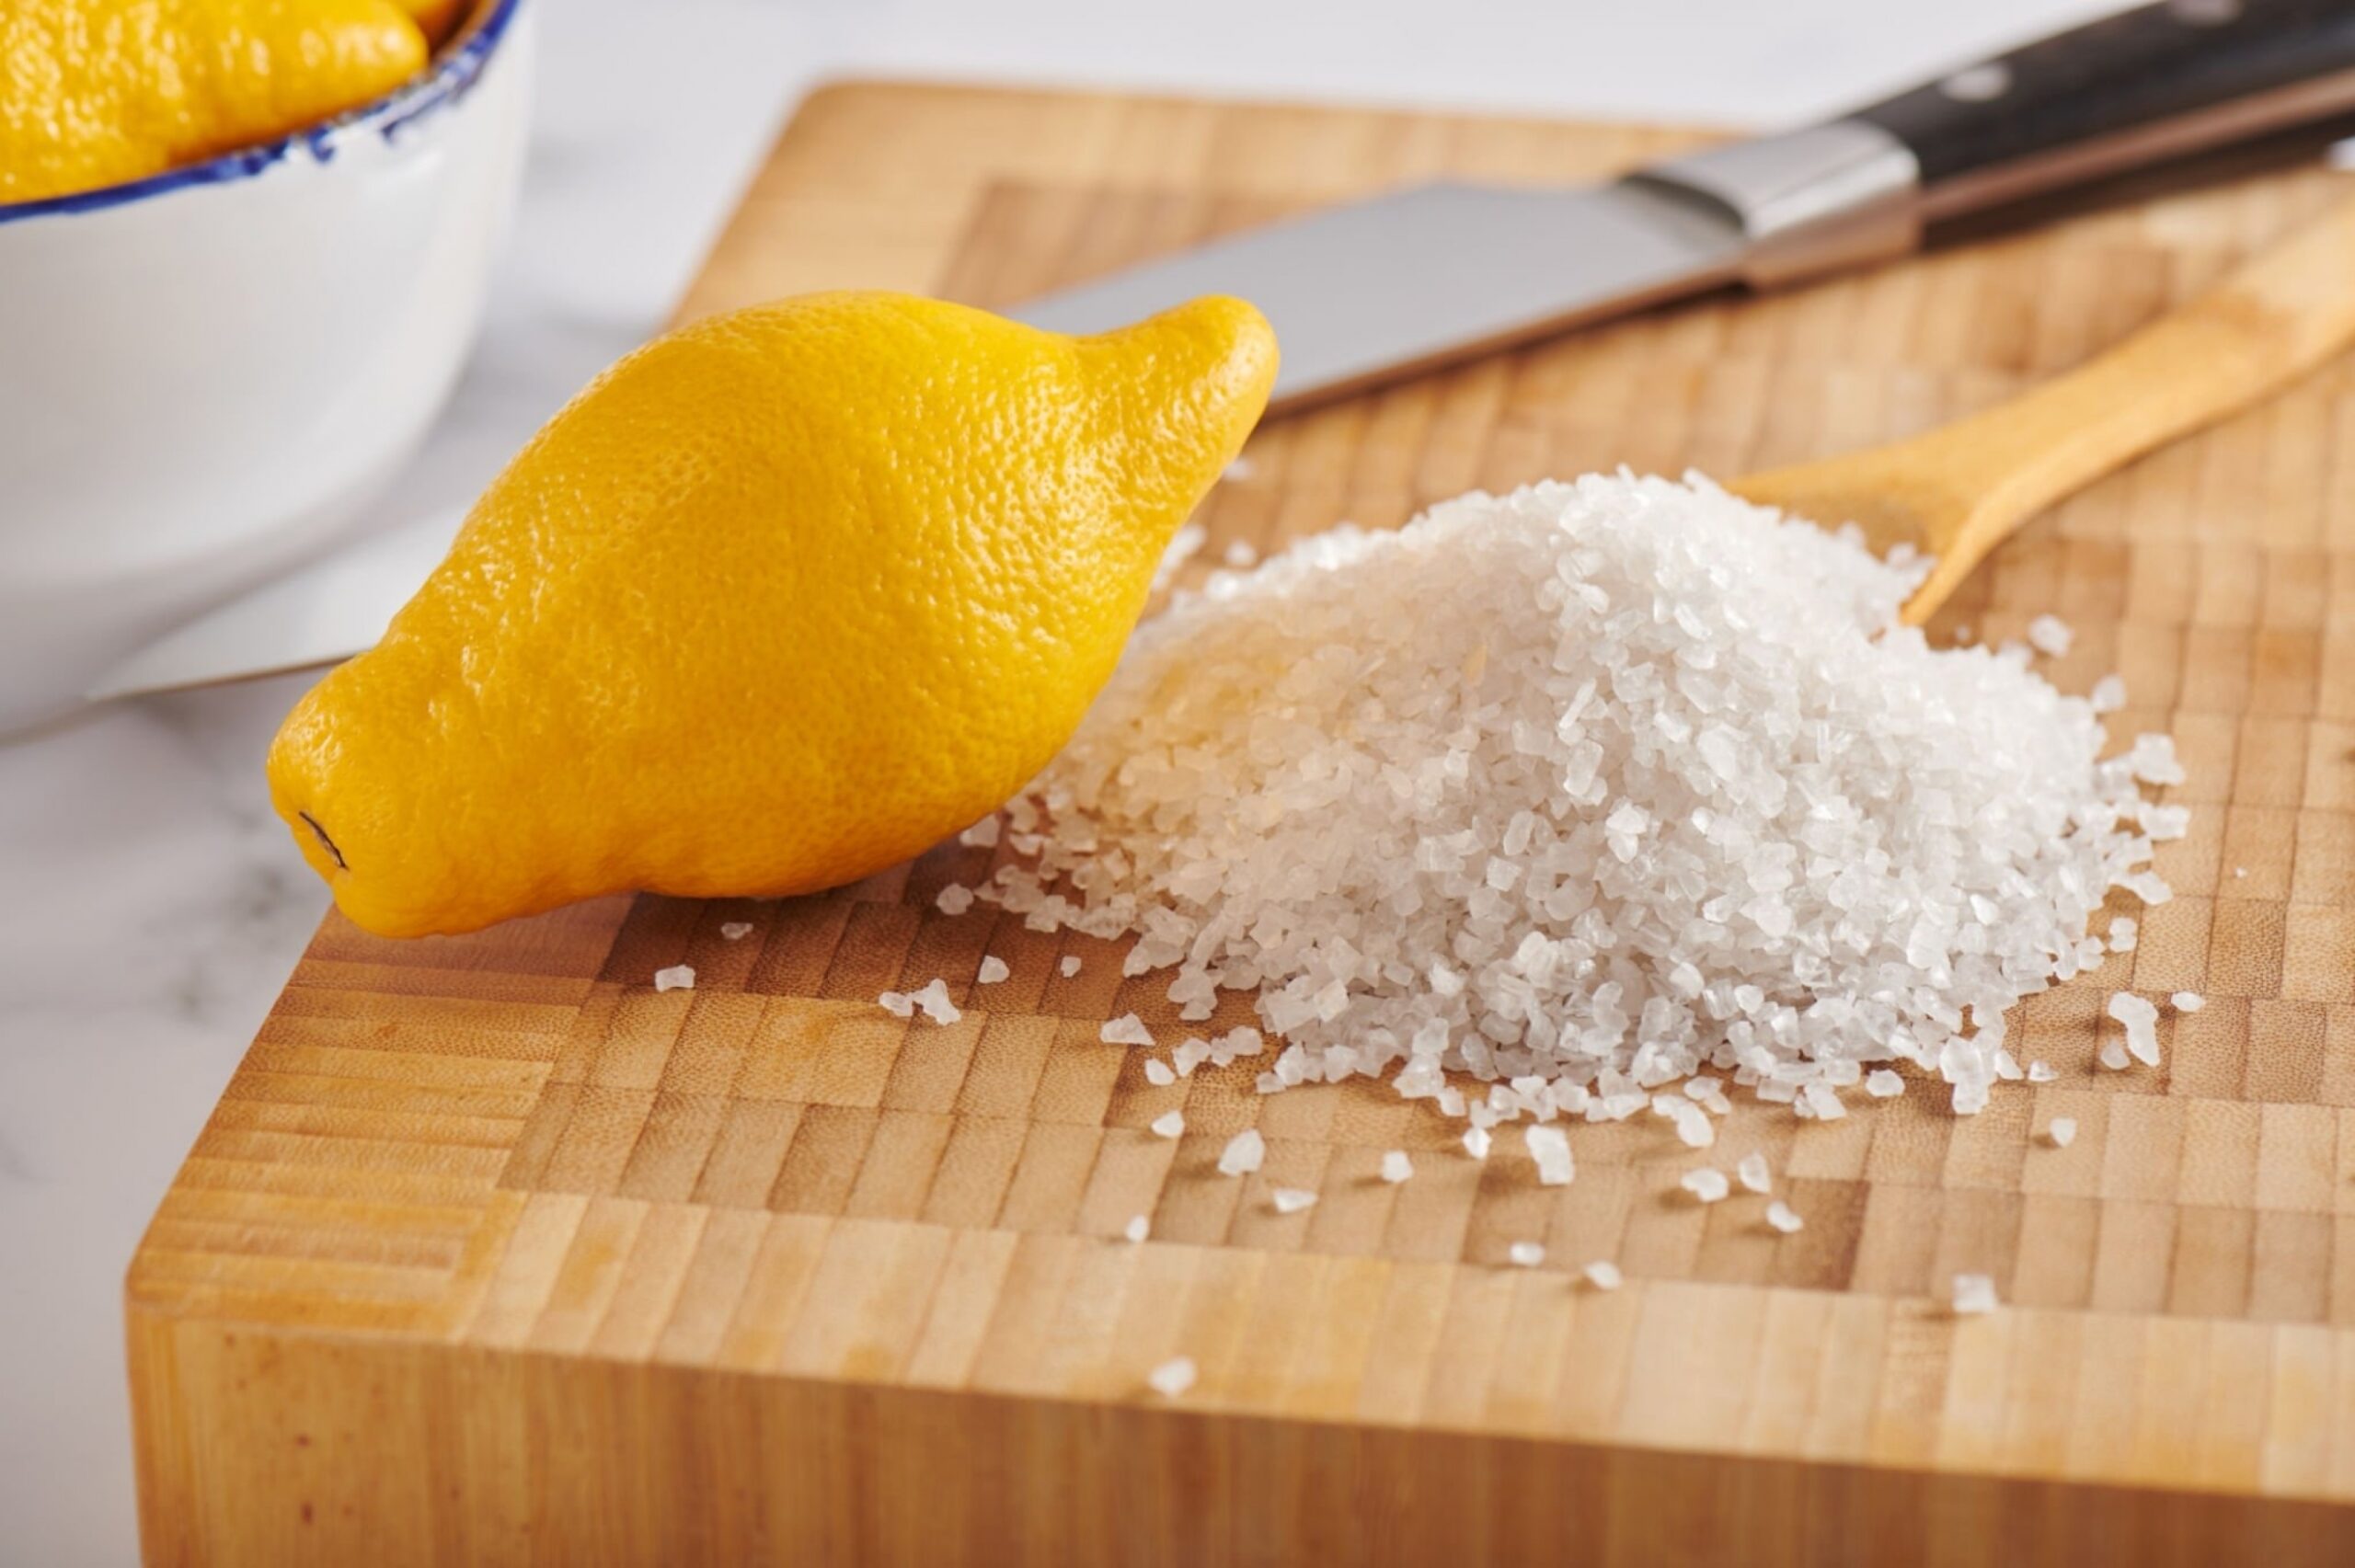 Lemon and pile of coarse sea salt on cutting board